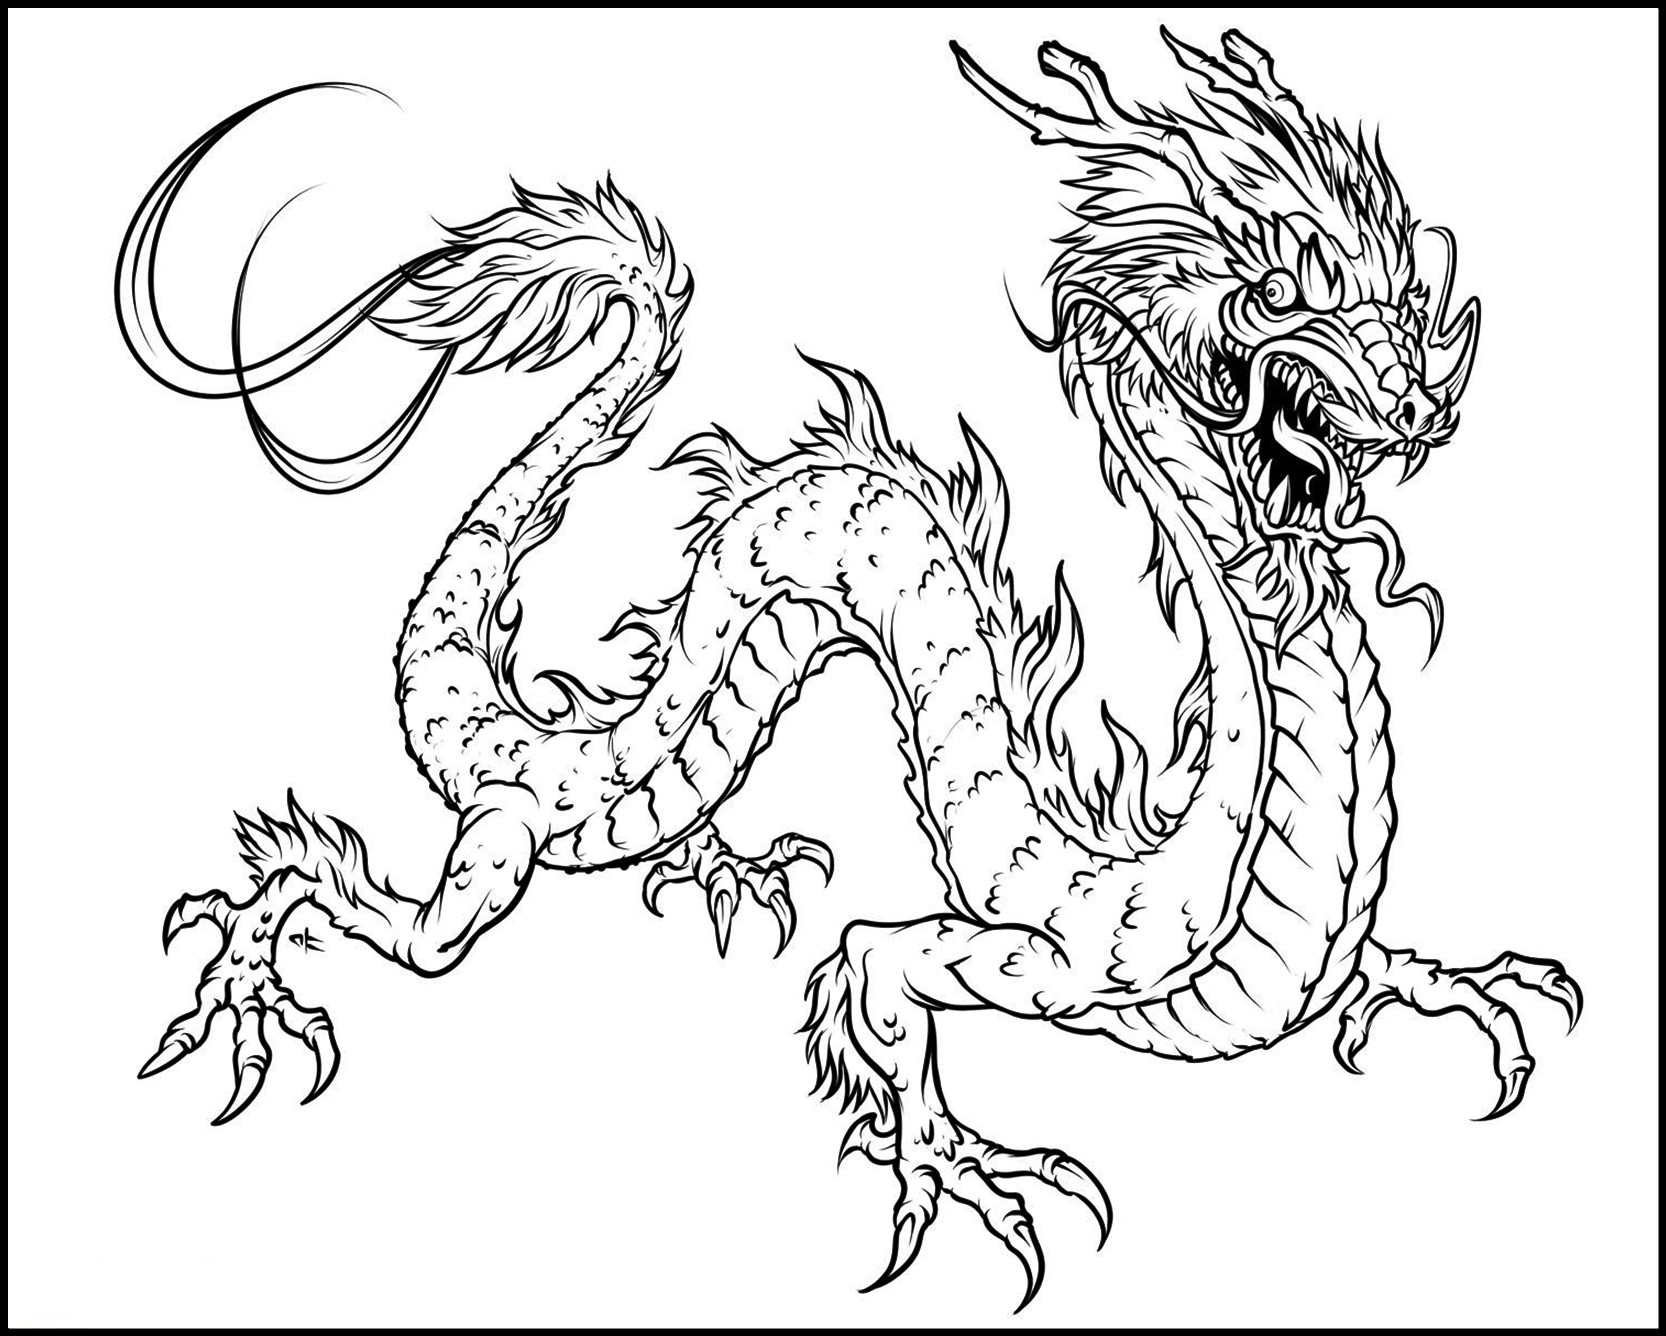 China’s Dragon